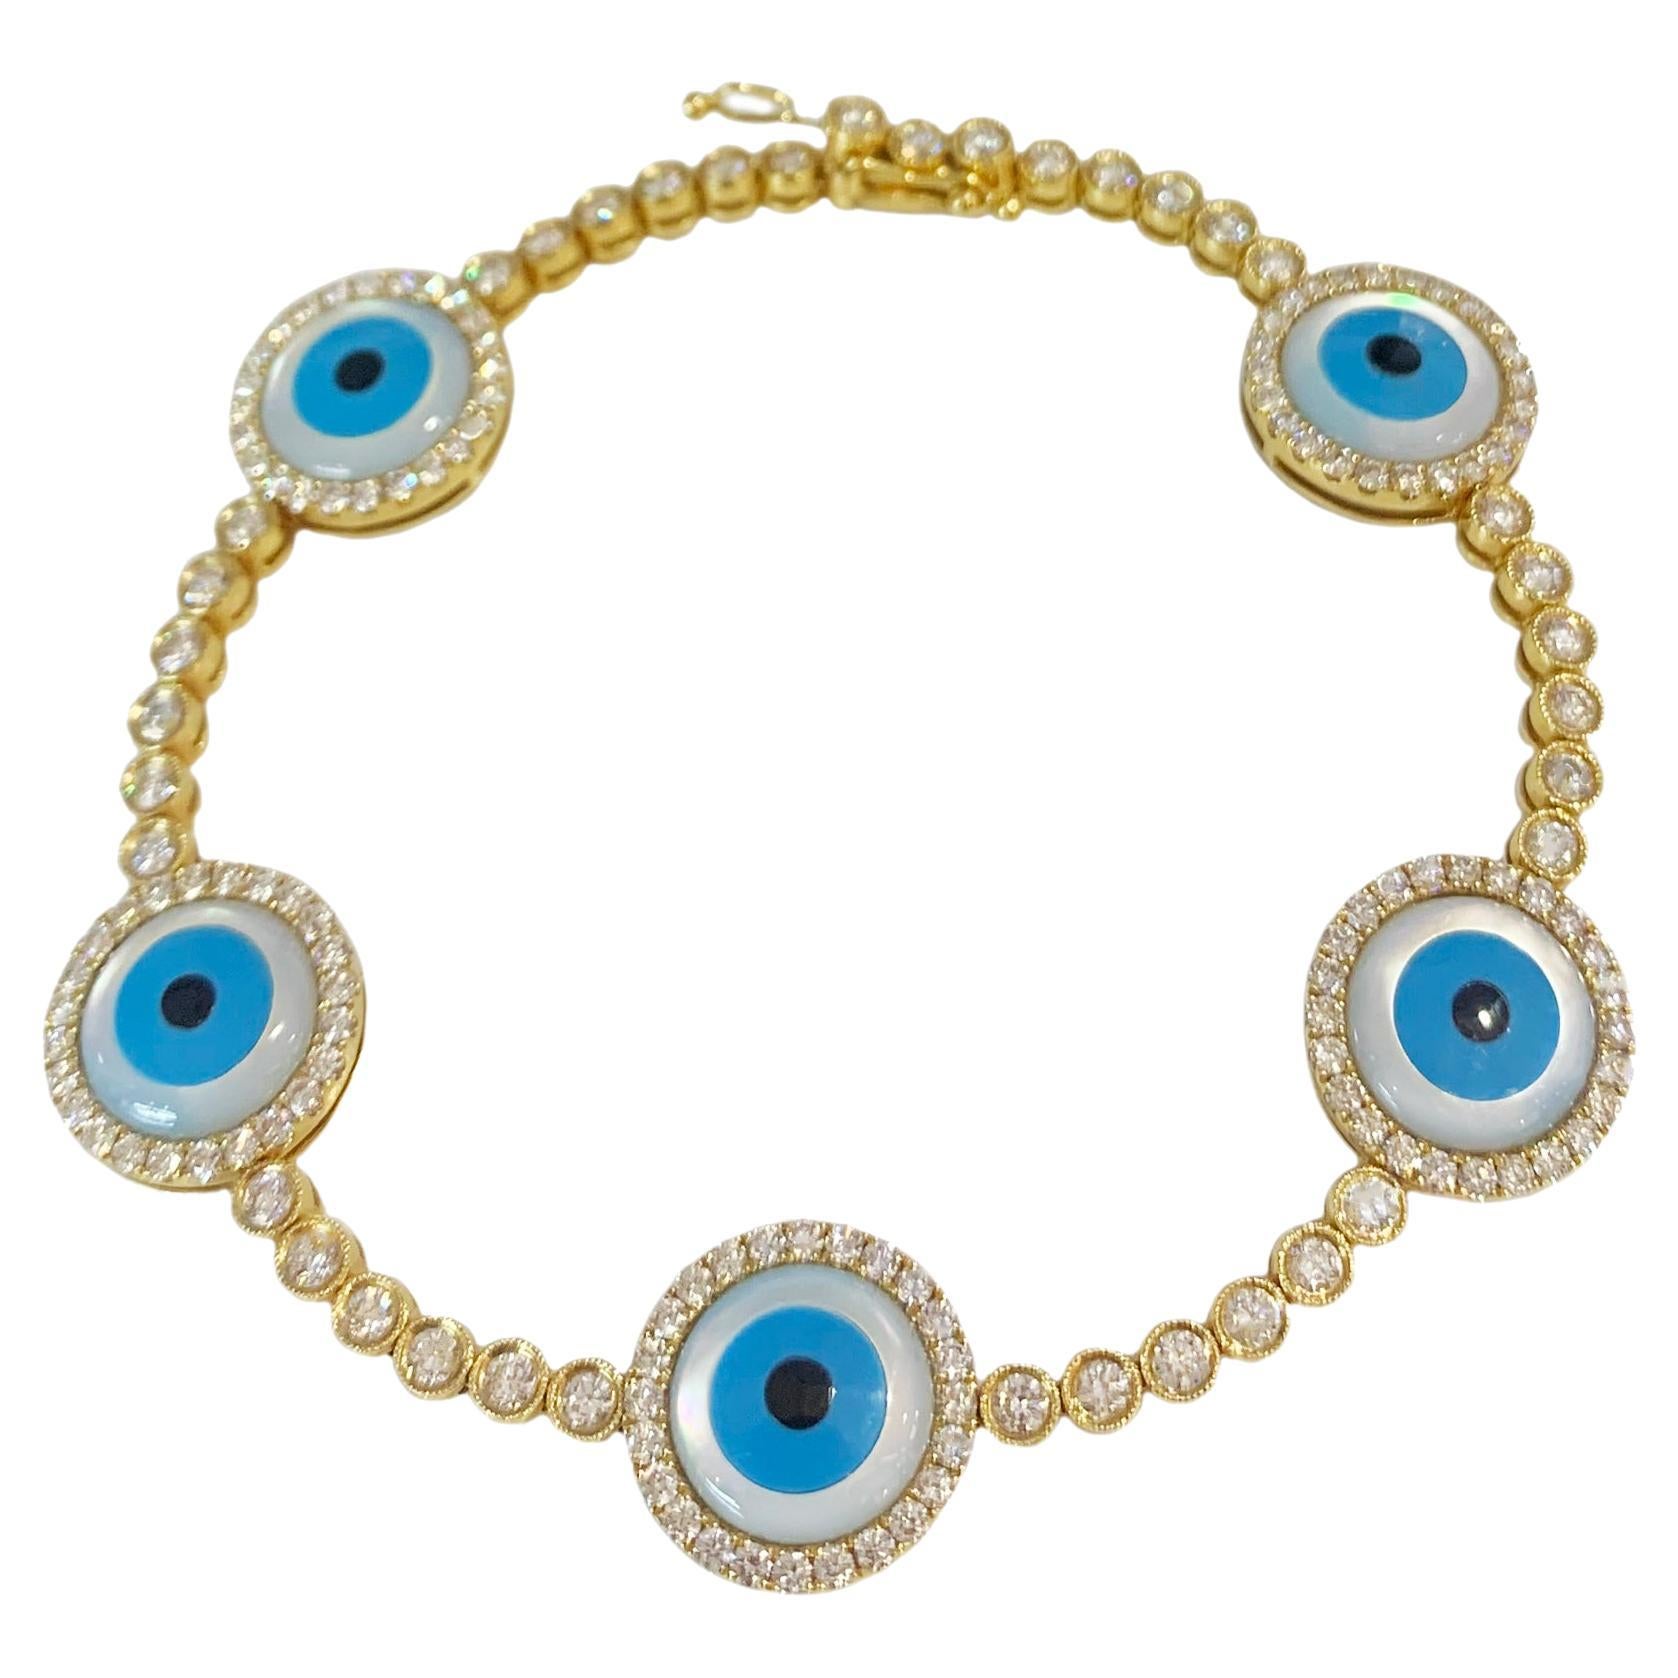 Evil Eye Diamond Bracelet in Yellow Gold